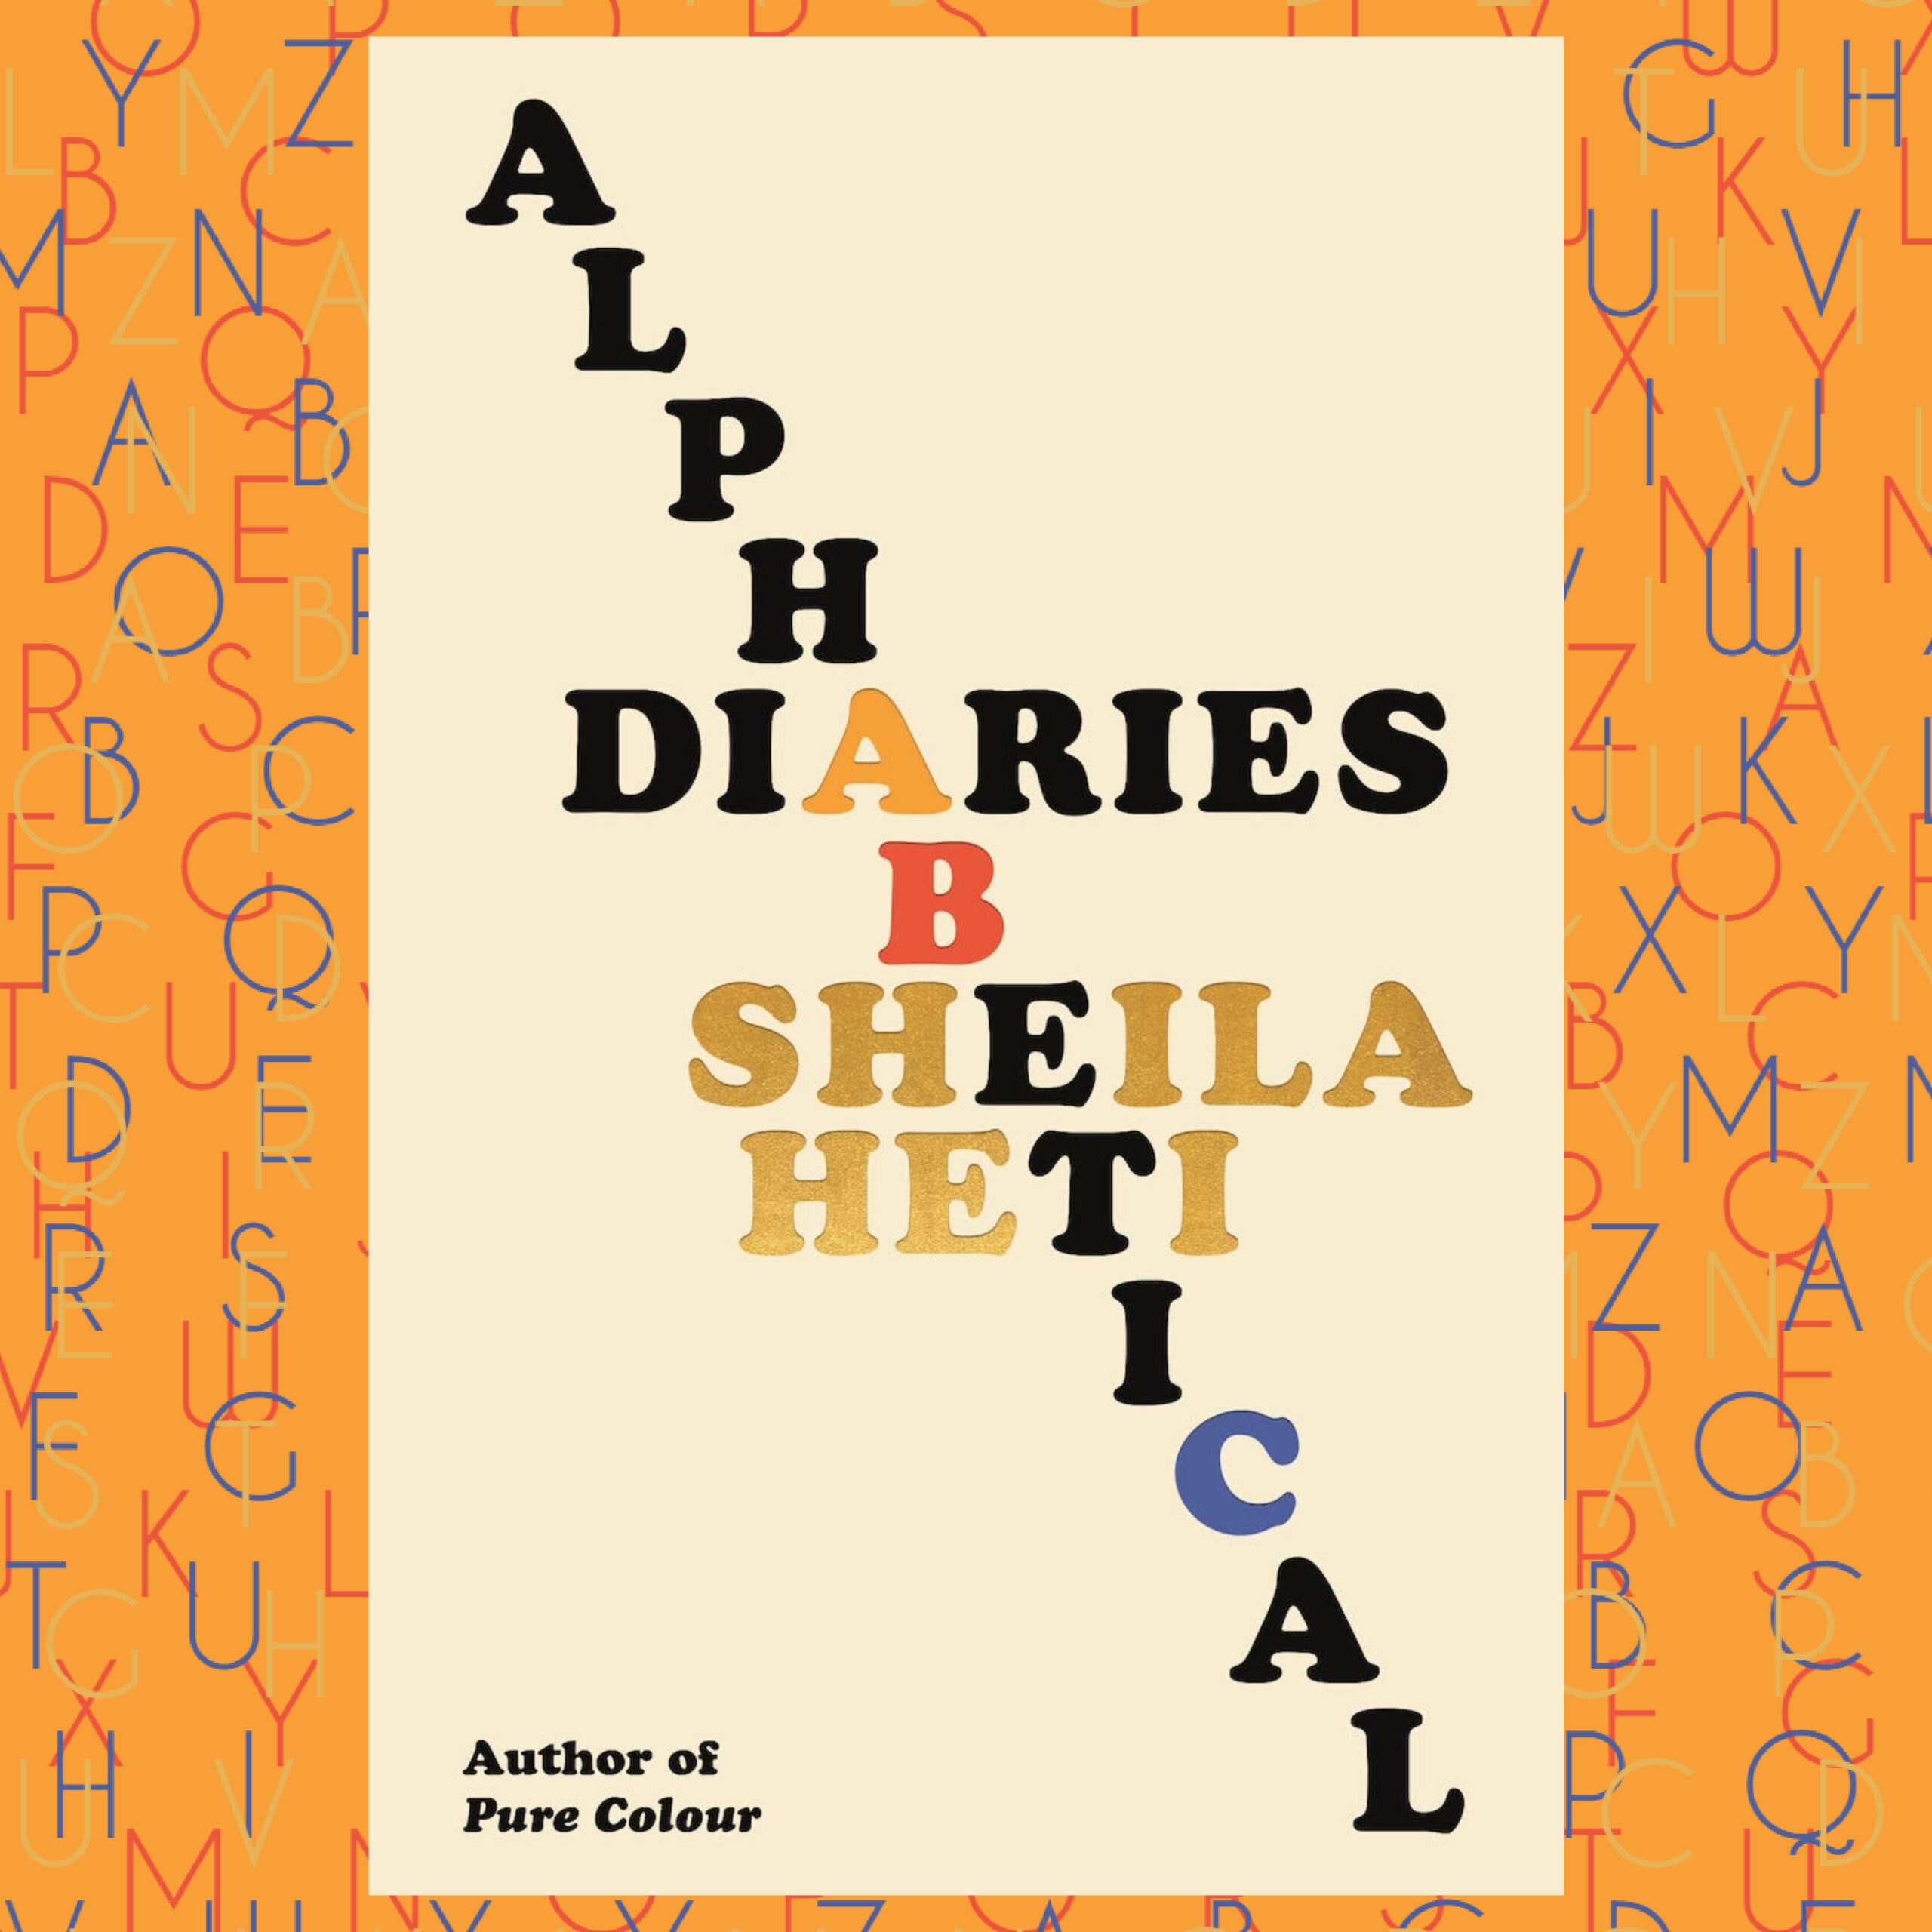 The Book Show | Sheila Heti - Alphabetical Diaries